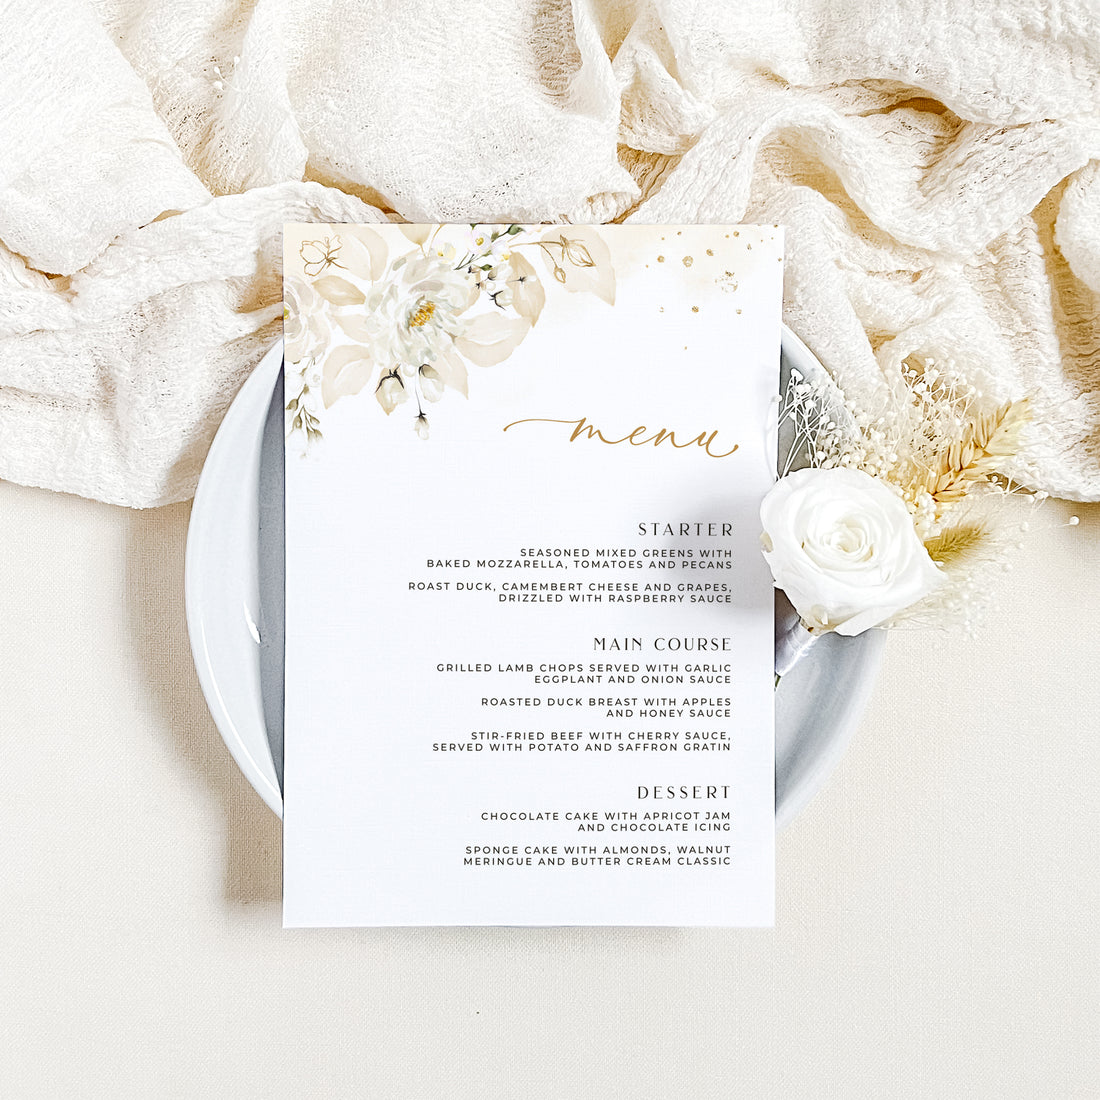 Dora | Printable Wedding Menu Template